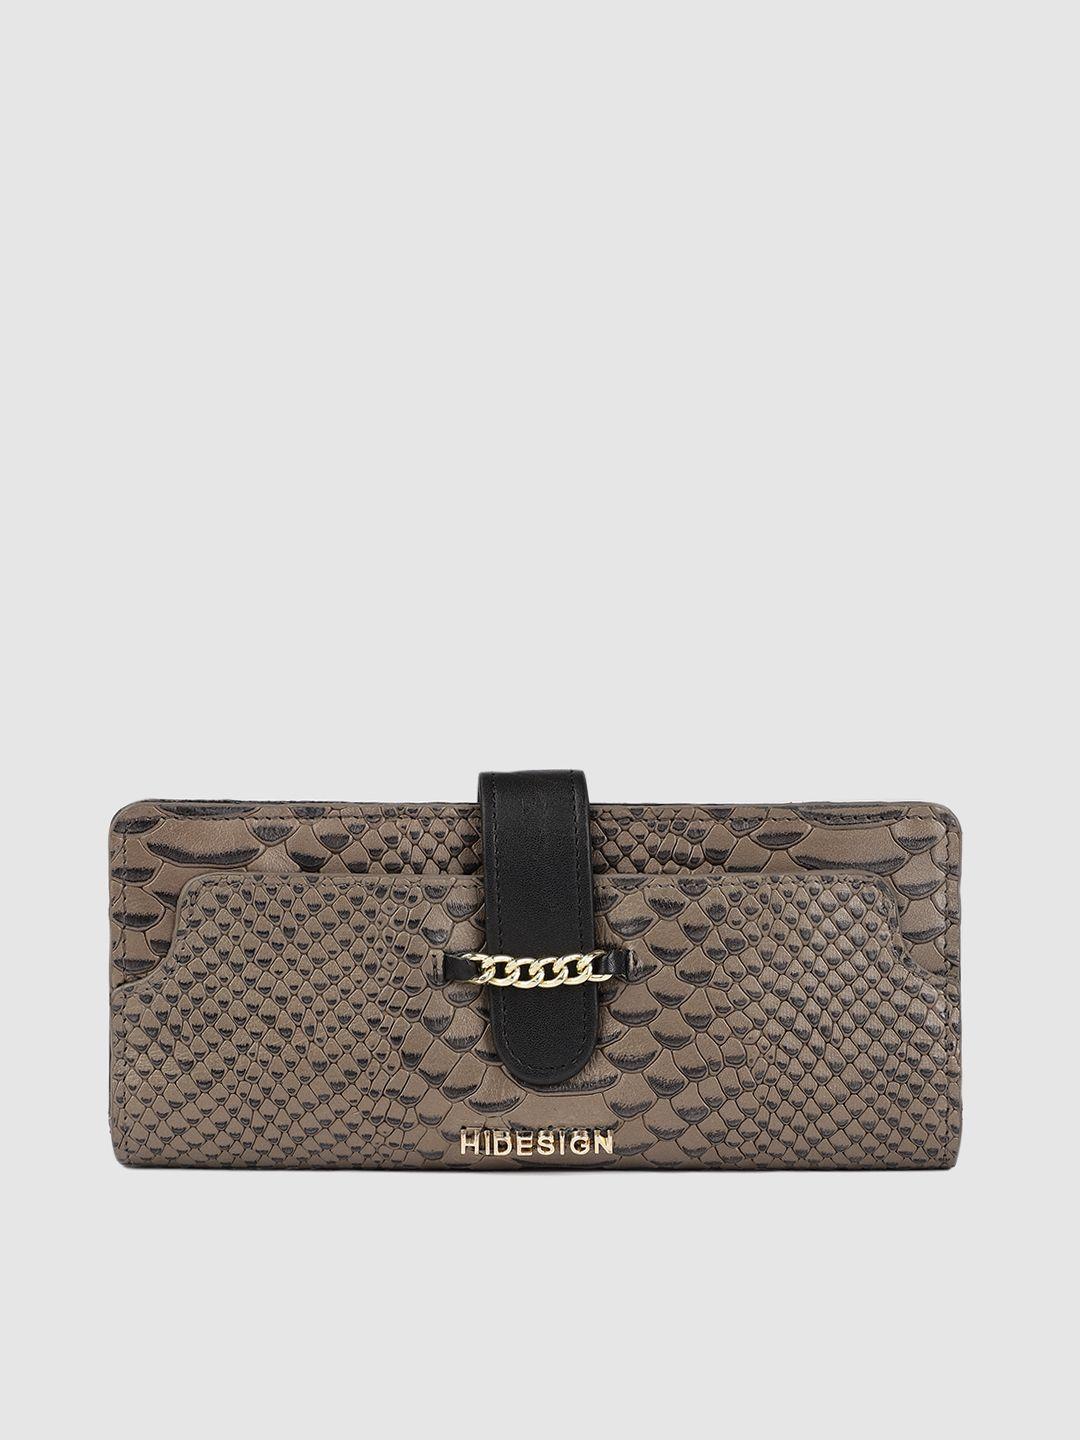 hidesign women gunmetal-toned snakeskin textured buckle detail leather two fold wallet